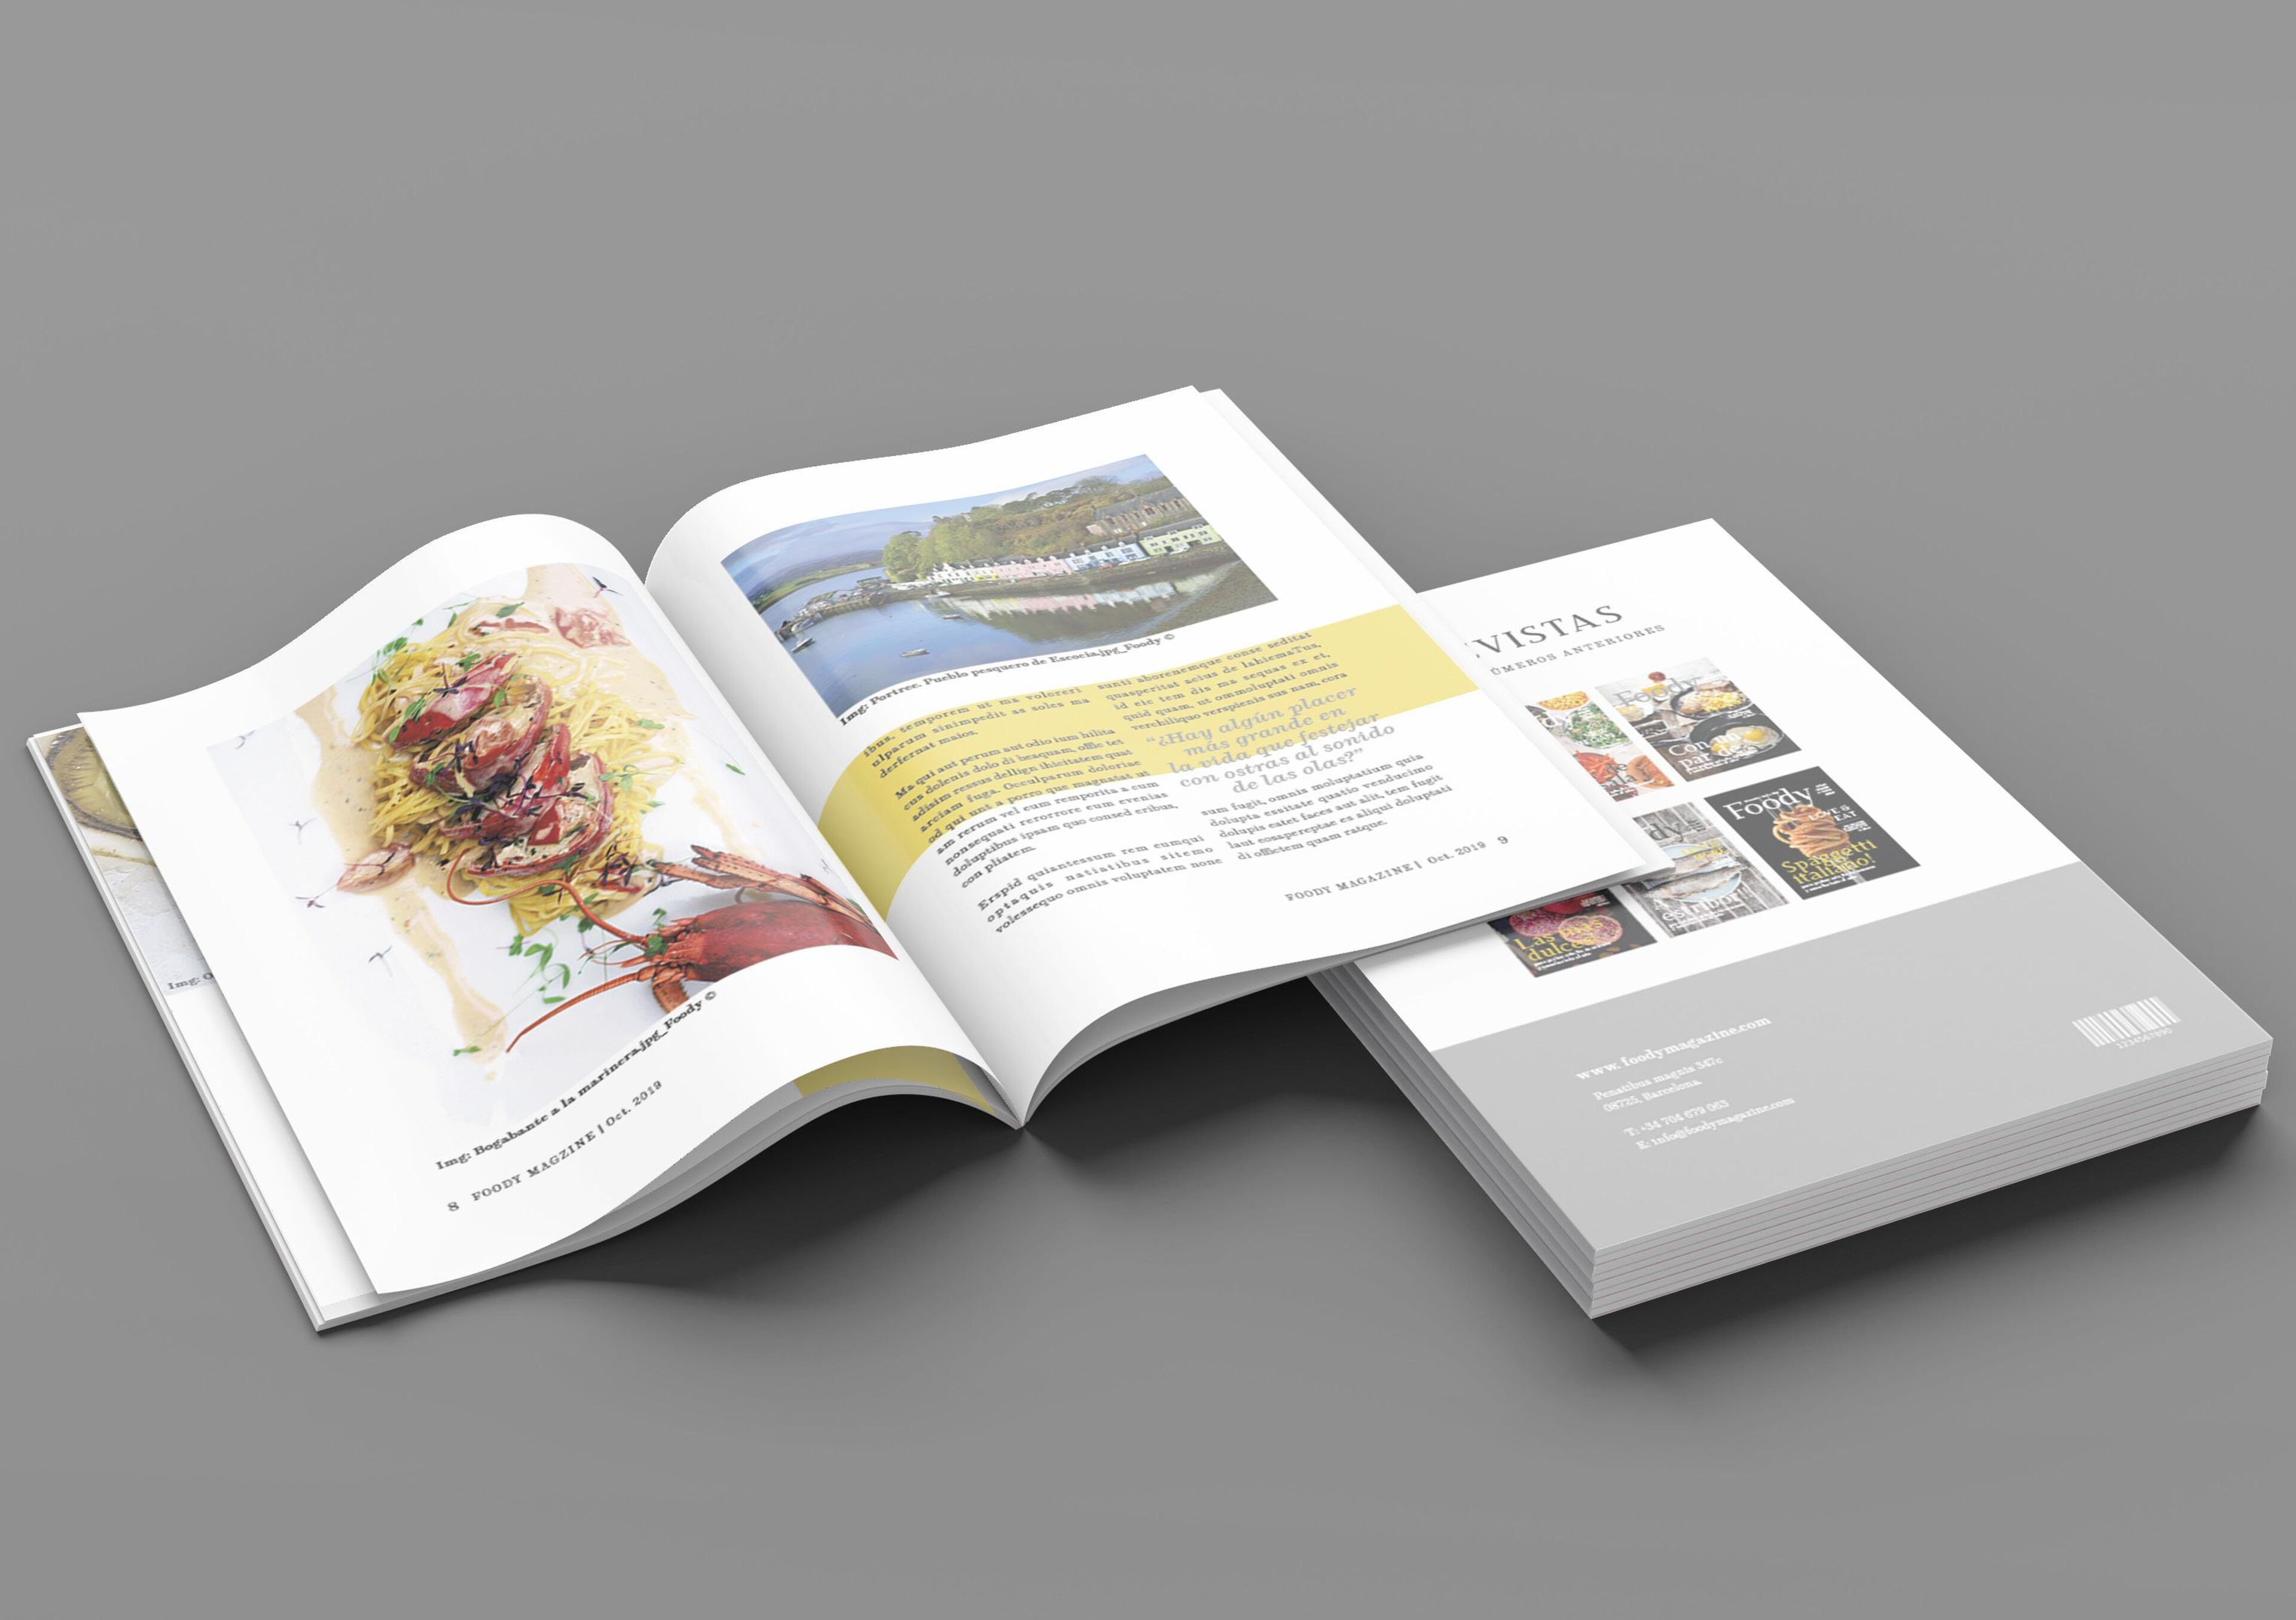 A high-quality print art magazine lies open, displaying vibrant artwork alongside text.